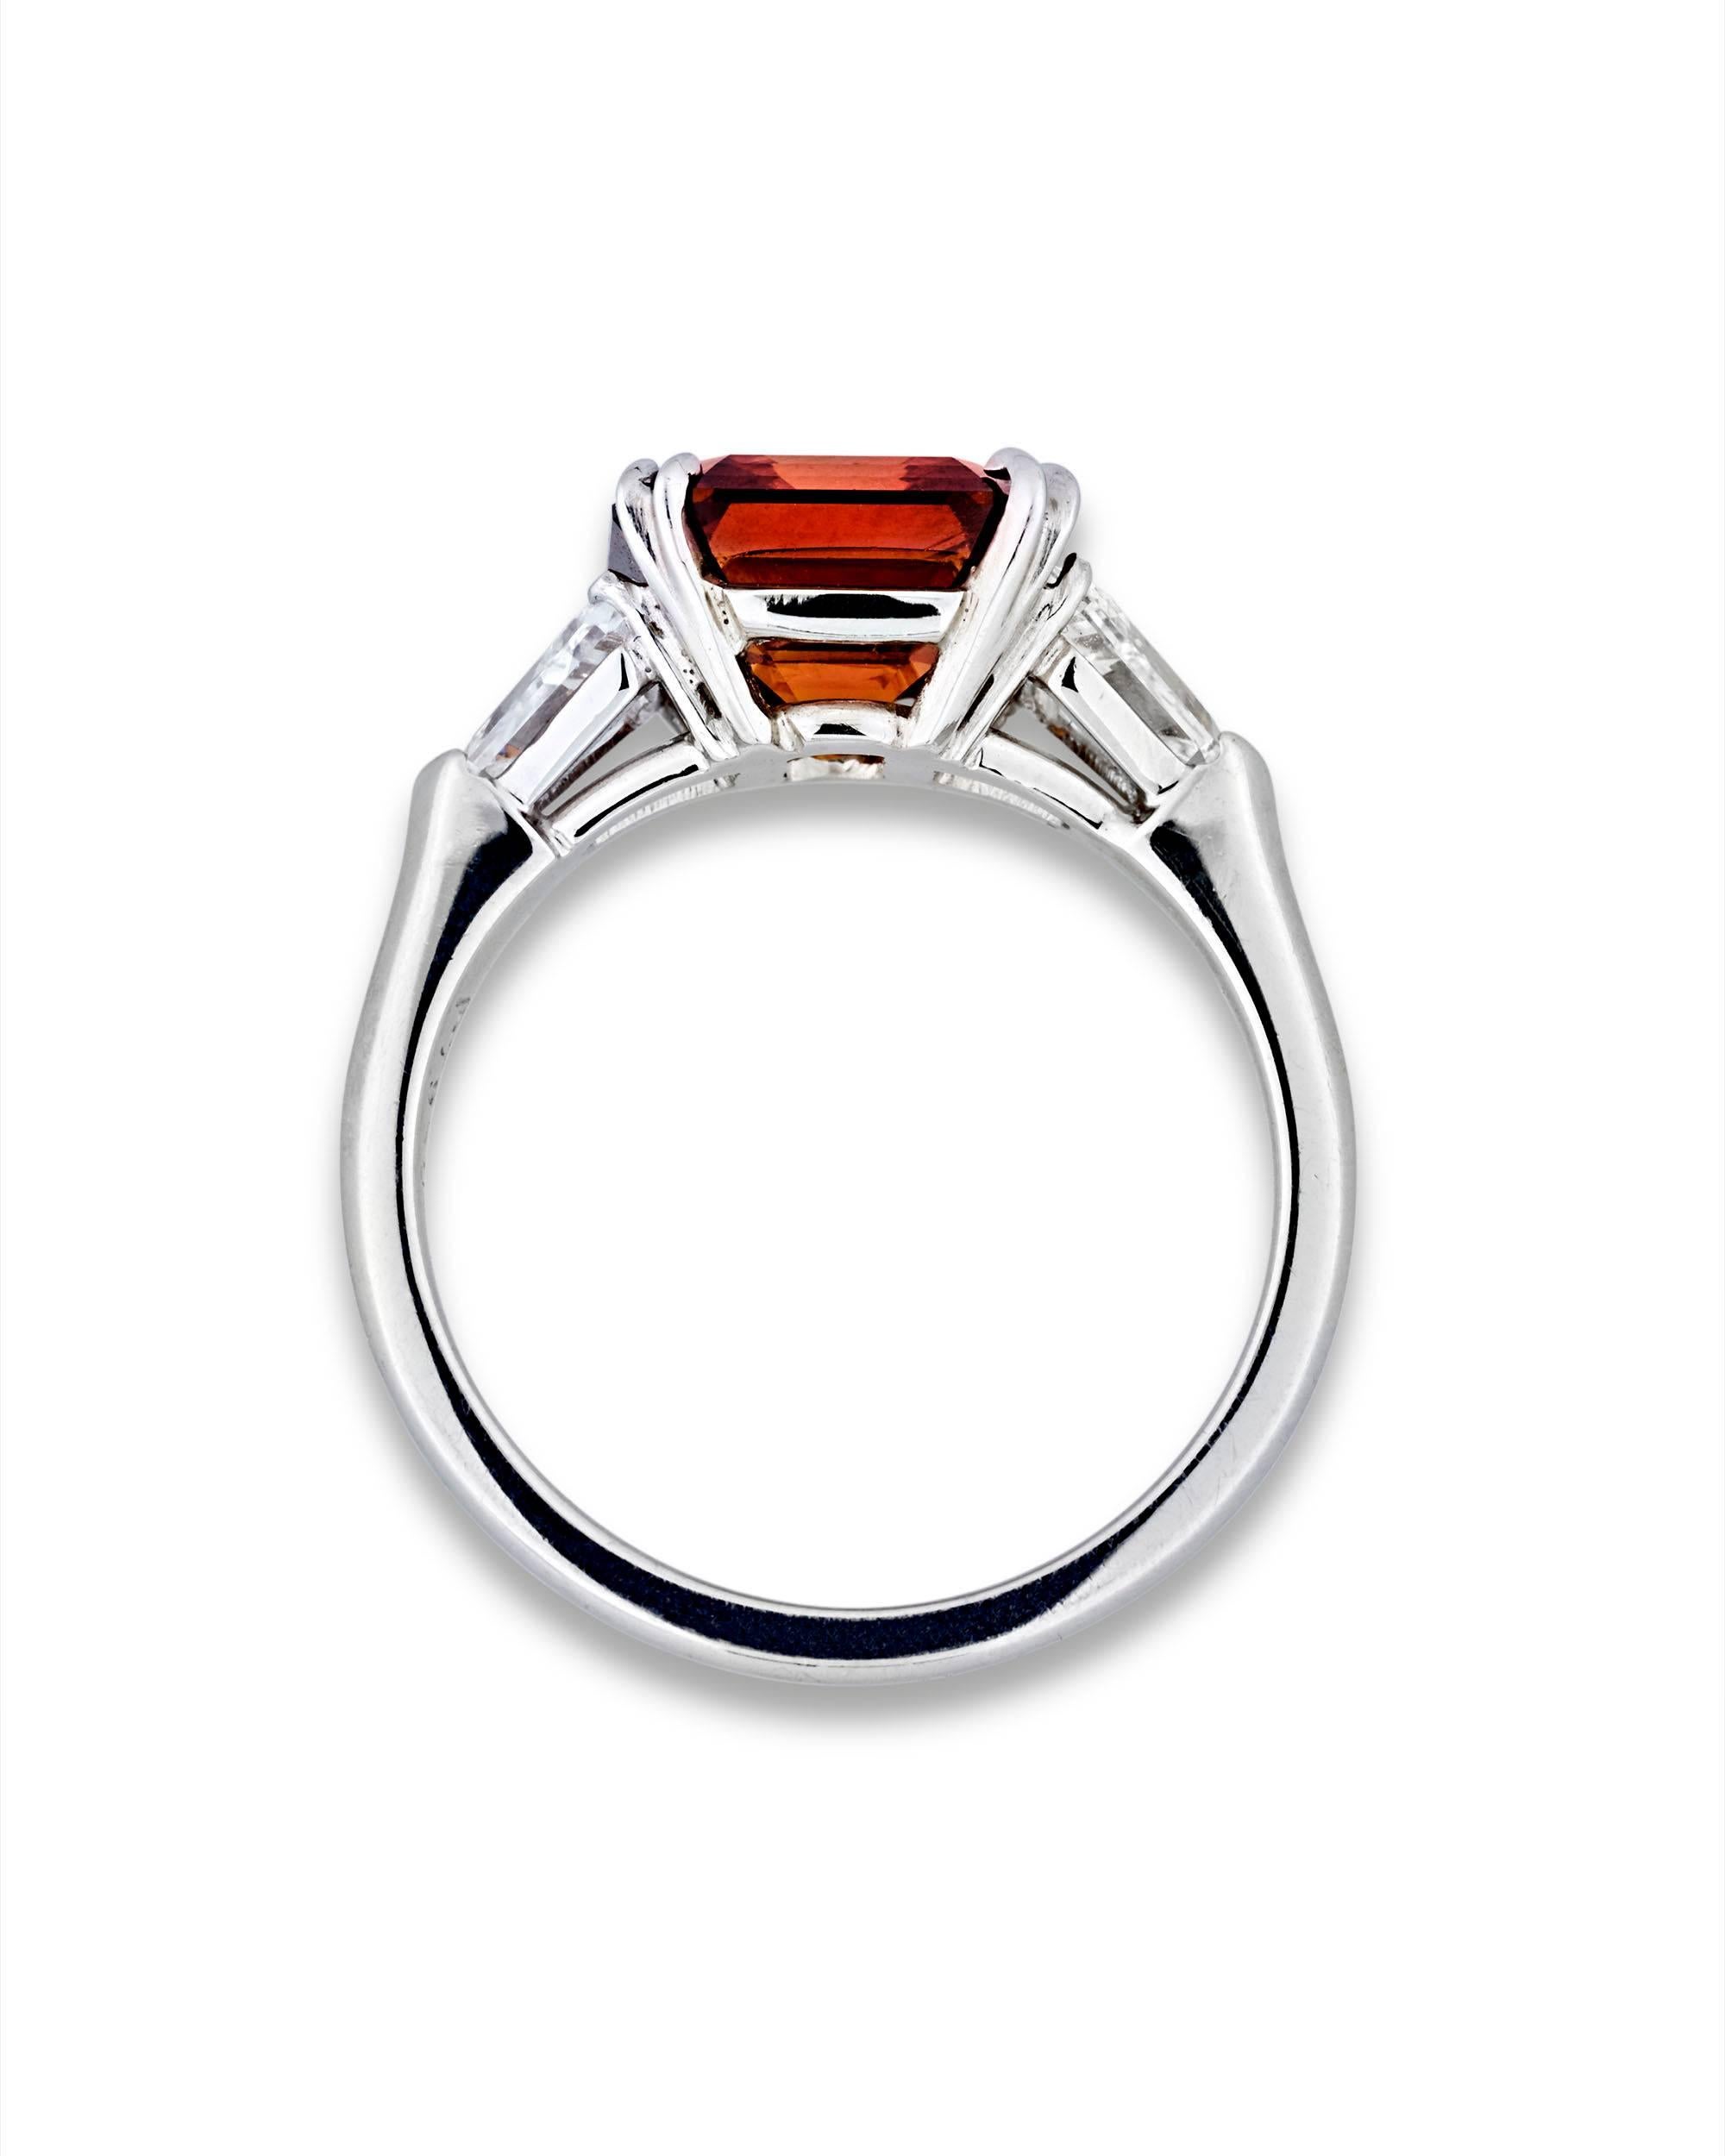 Emerald Cut Fancy Deep Brown Orange 3.38 Carat Diamond Platinum Ring